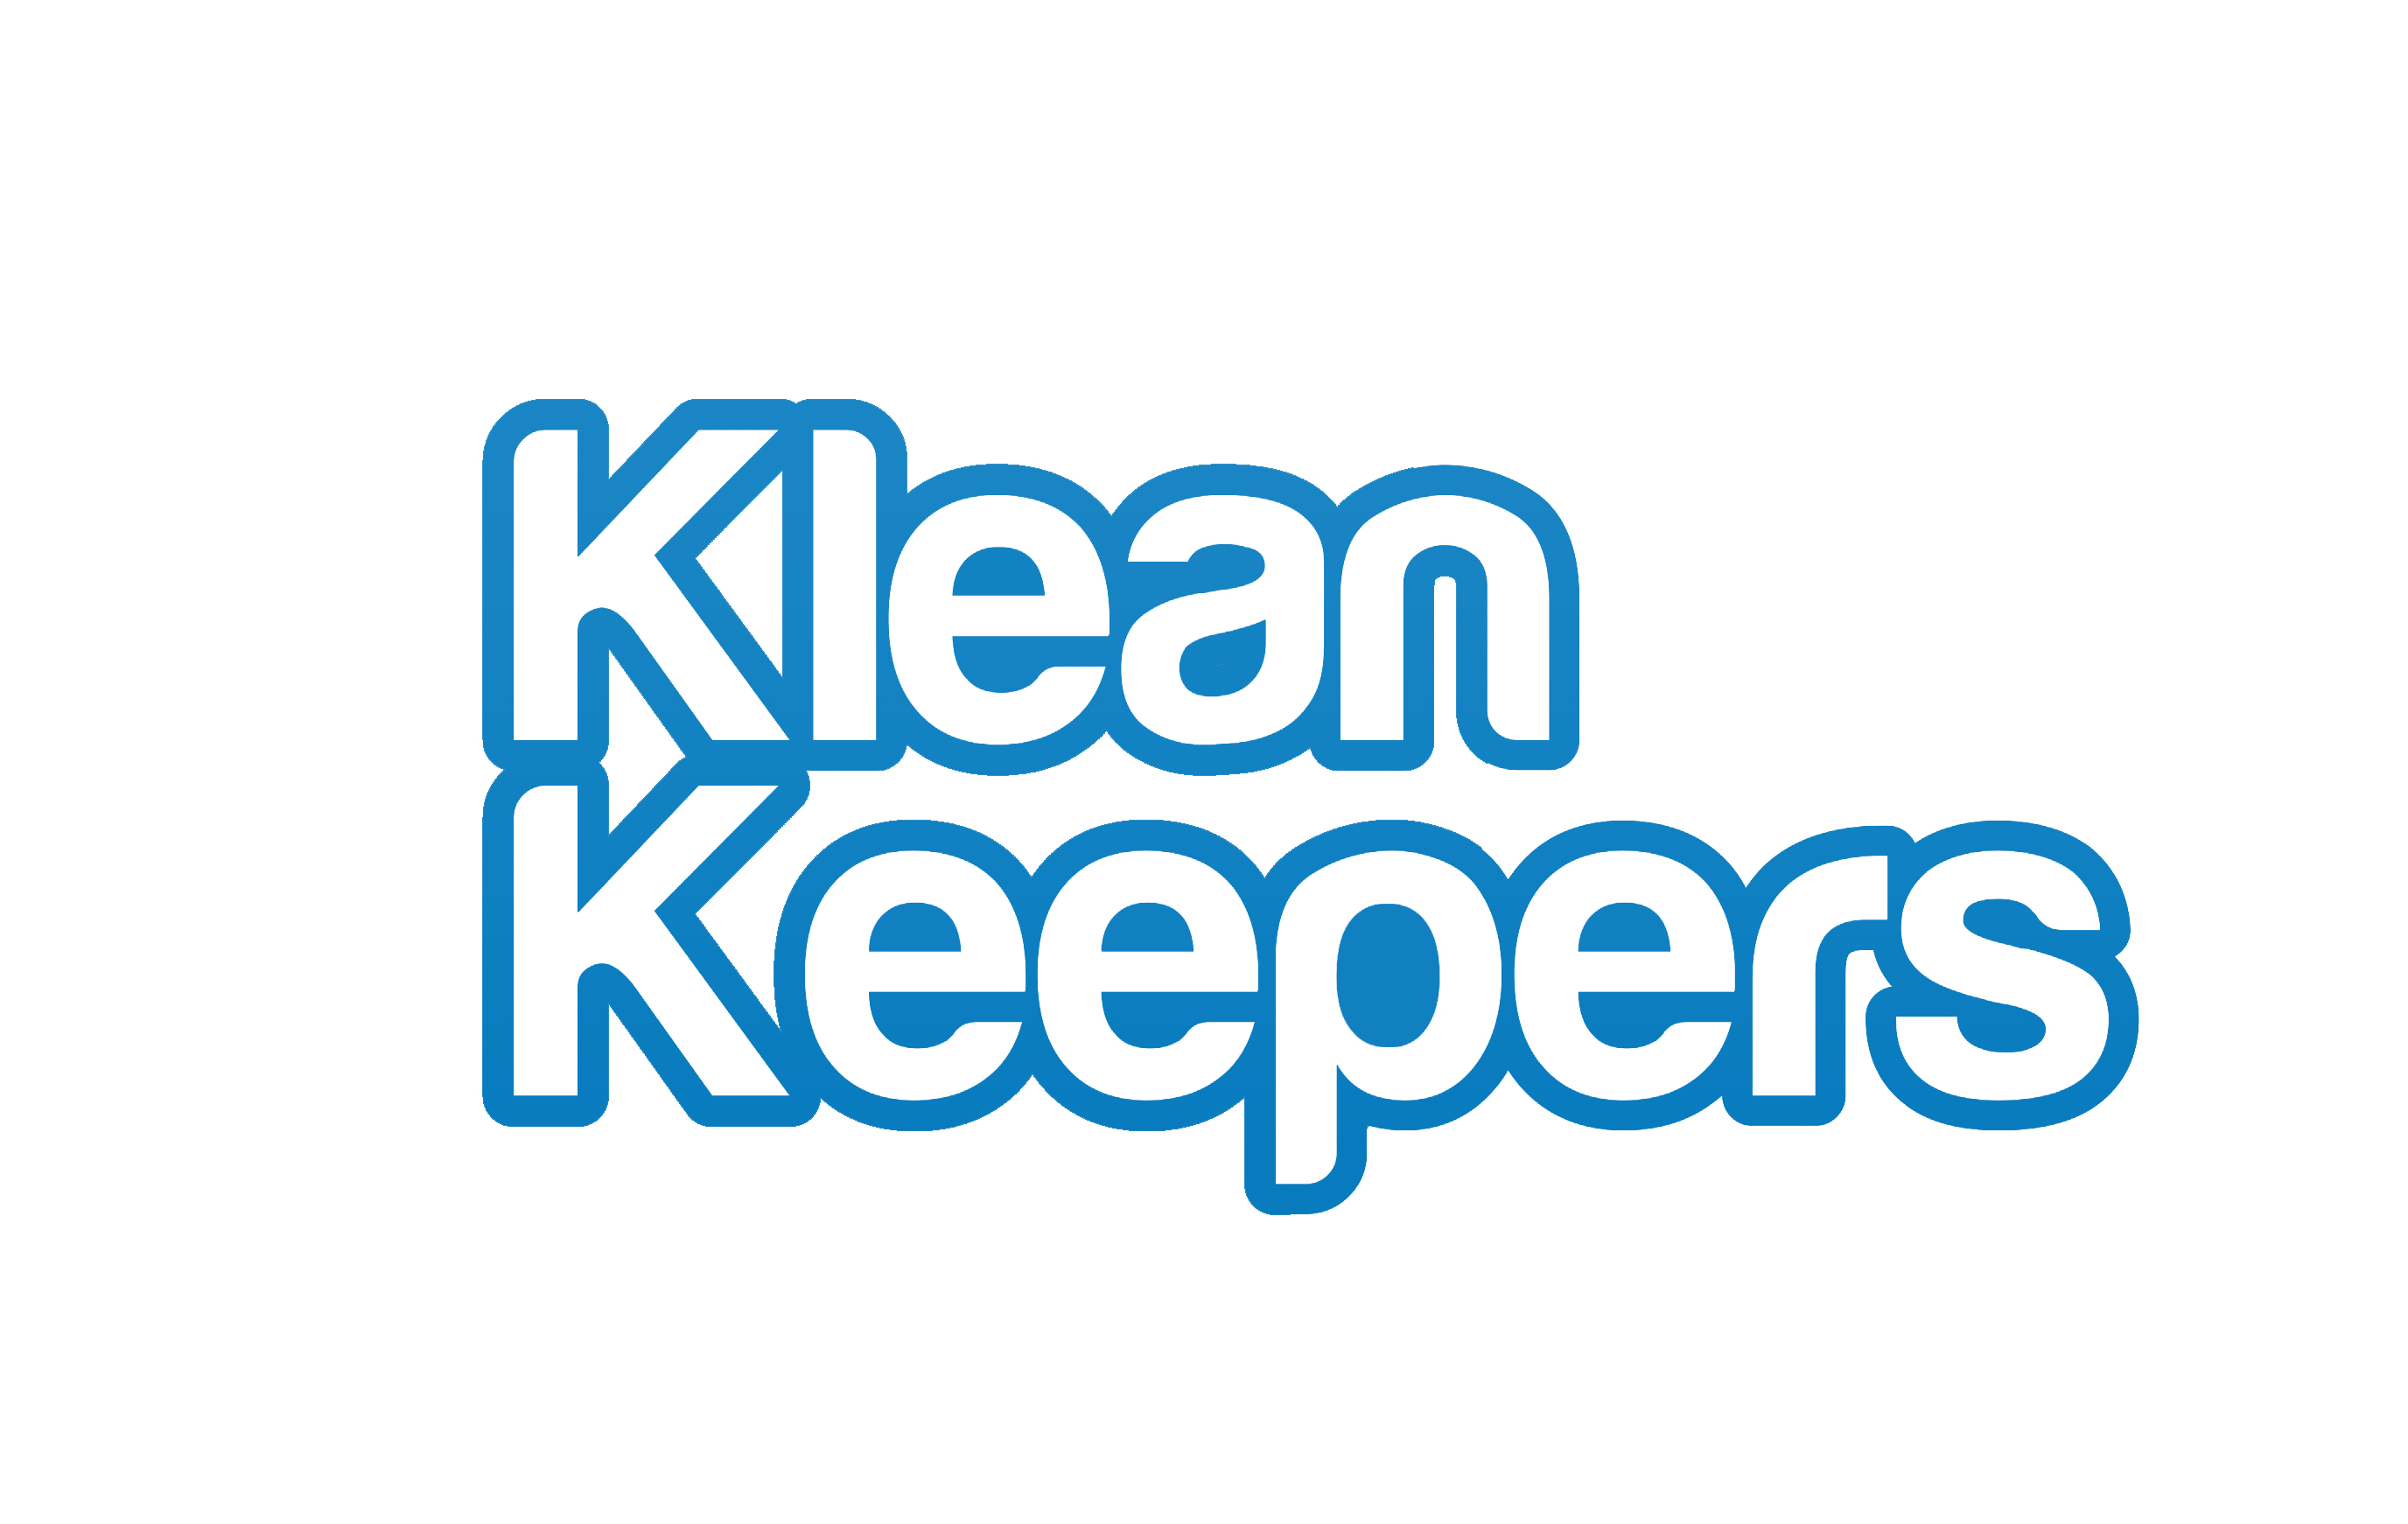 Kleankeepers Ltd